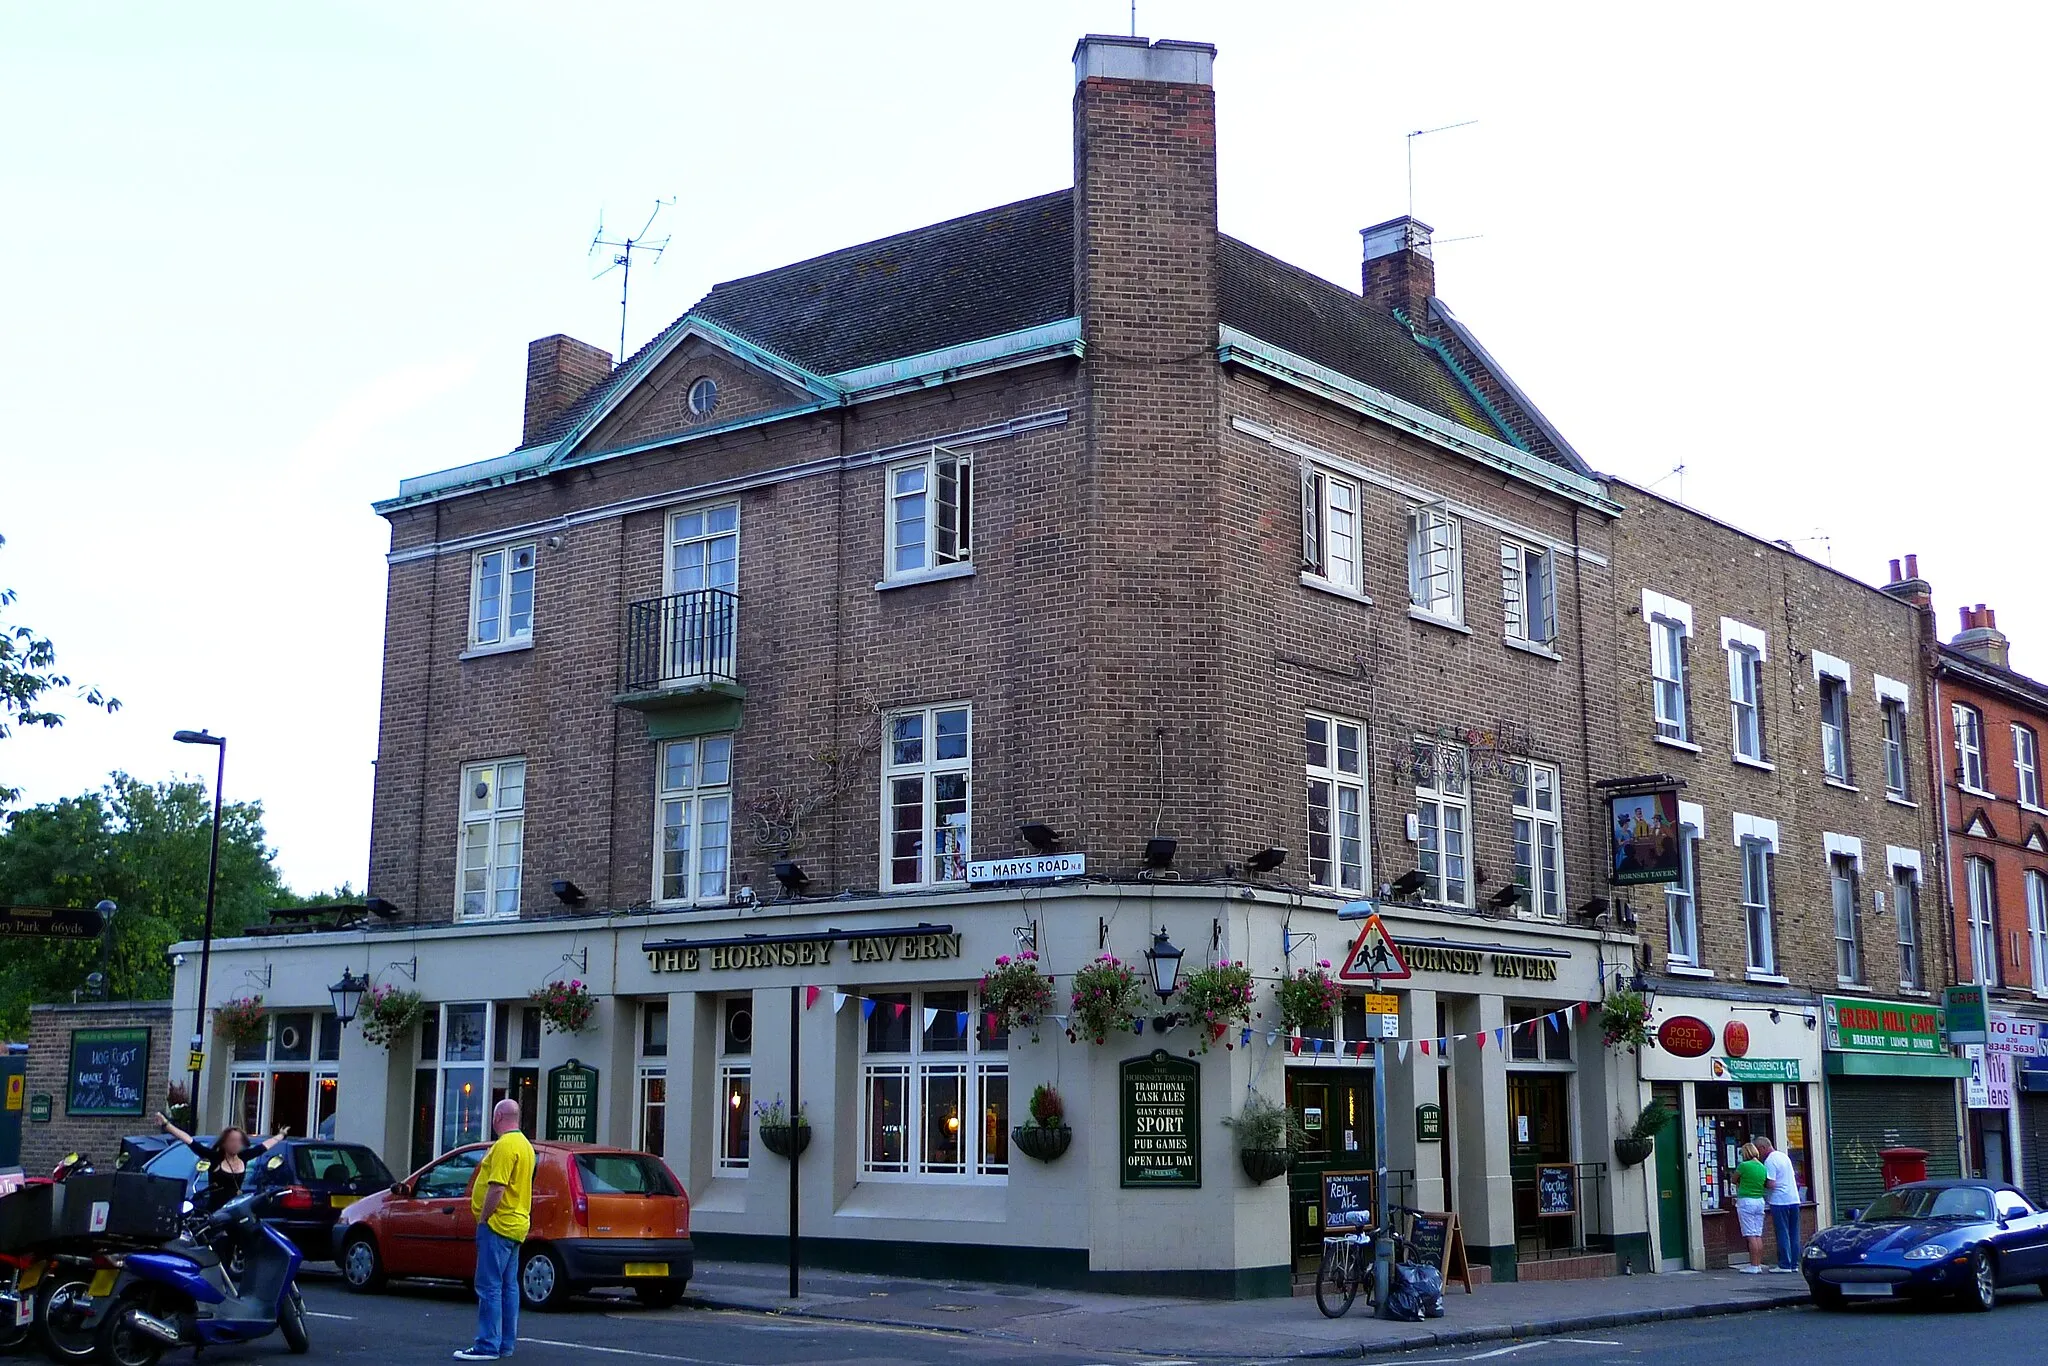 Photo showing: A Greene King pub on the High St.
Address: 26 High Street.
Owner: Greene King.
Links:

London Pubology